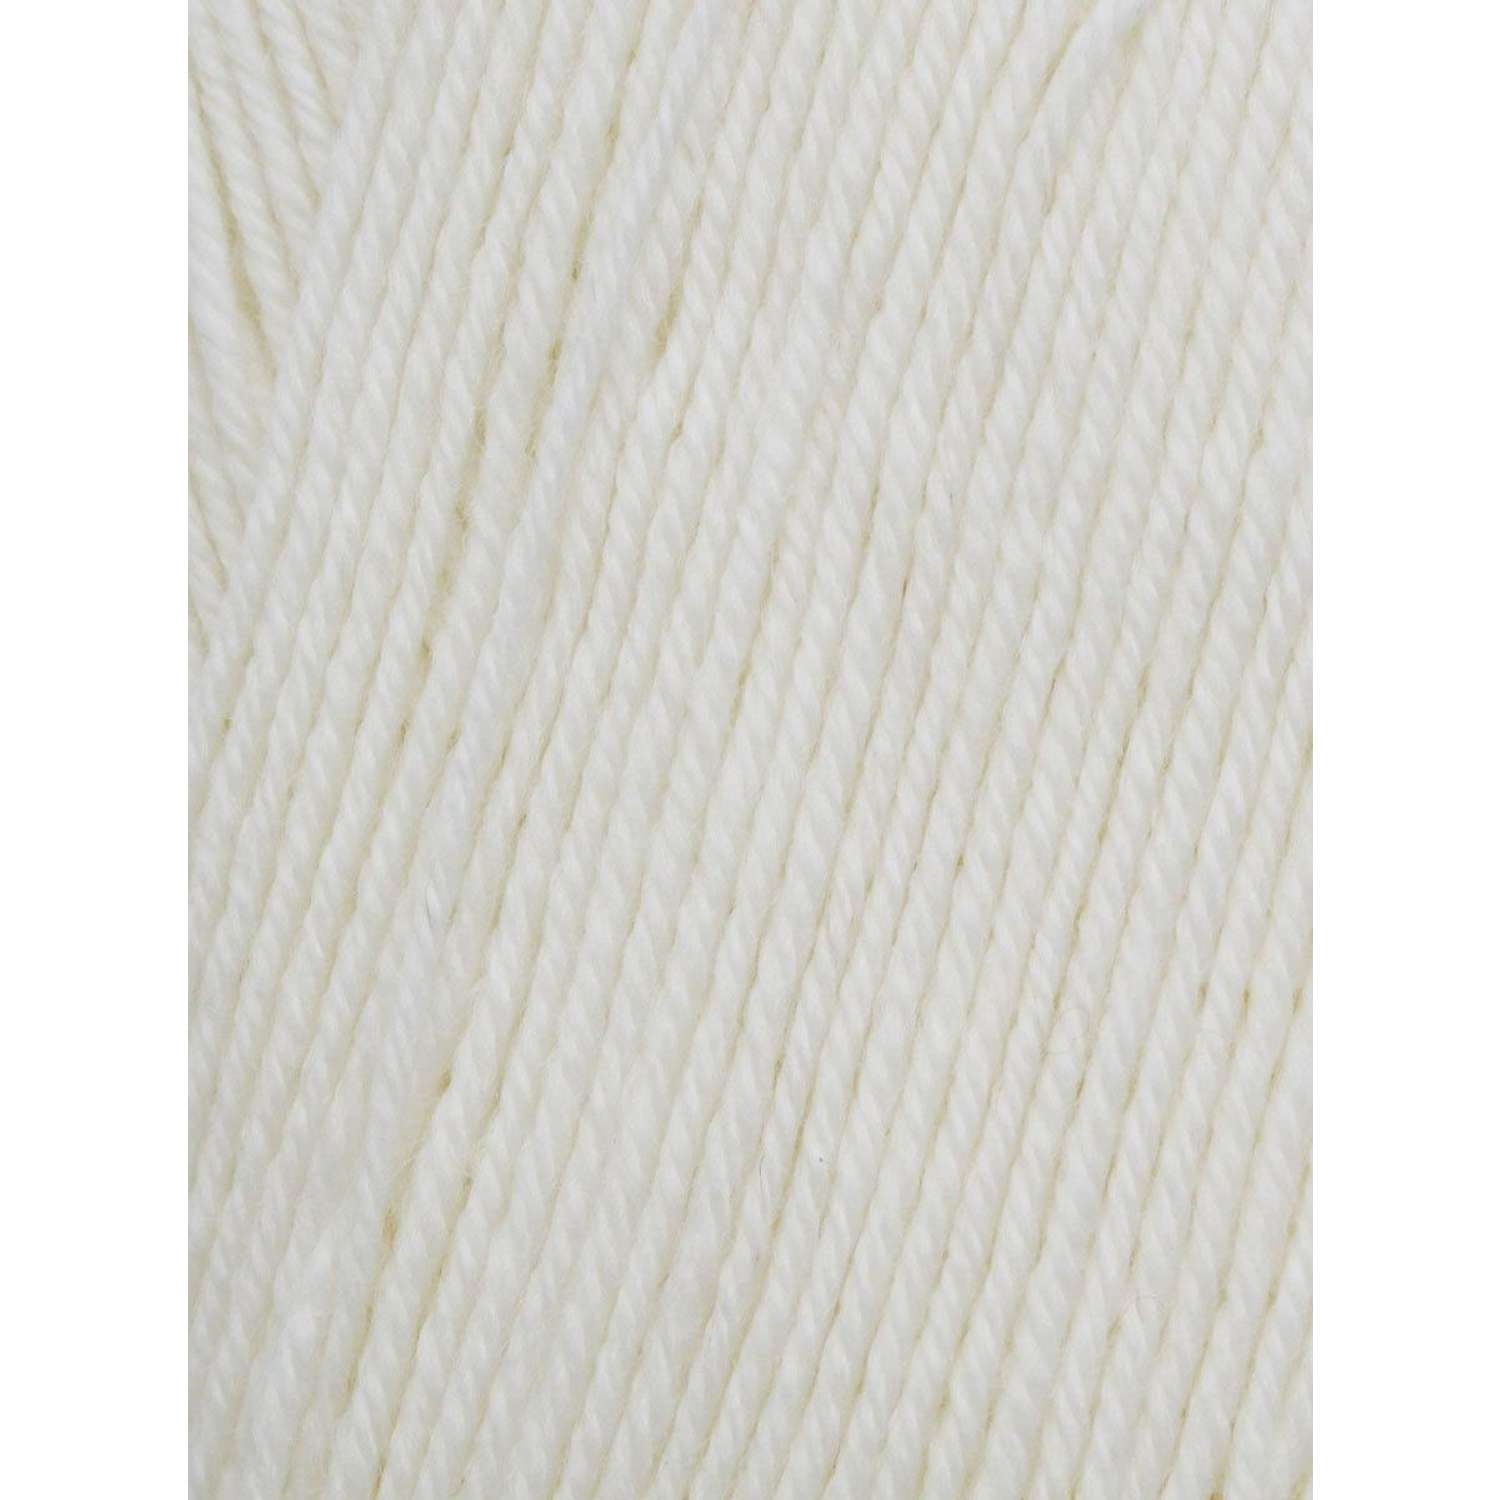 Пряжа Astra Premium Афродита полушерстяная 100 г 250 м 01 16 белый 3 мотка - фото 3